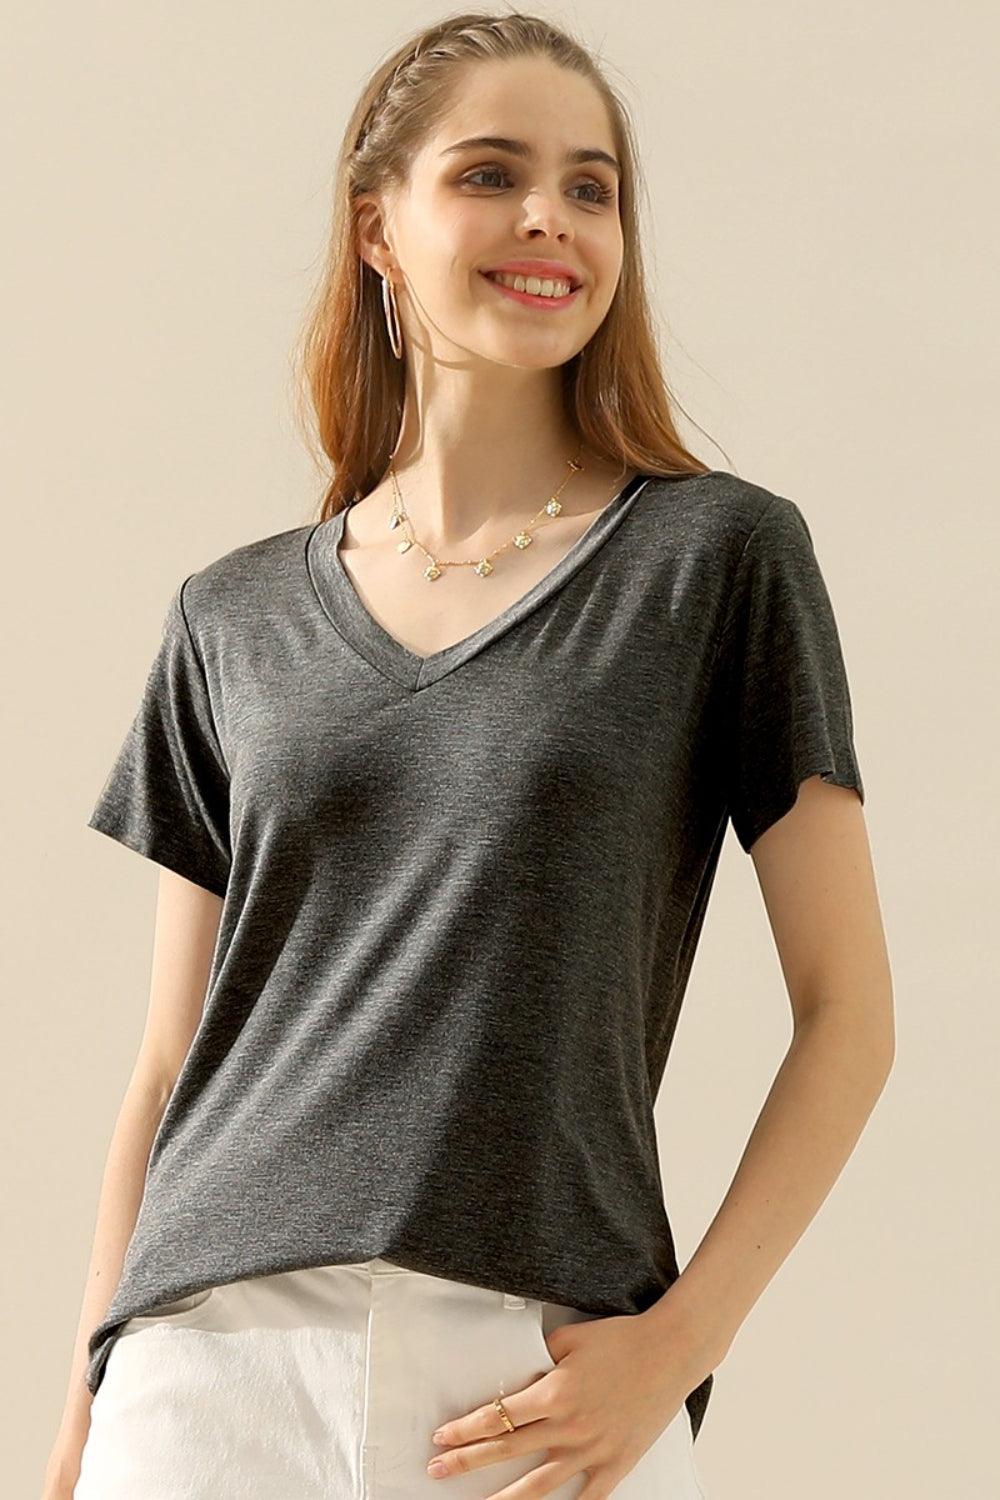 Ninexis Full Size V-Neck Short Sleeve T-Shirt T-Shirts